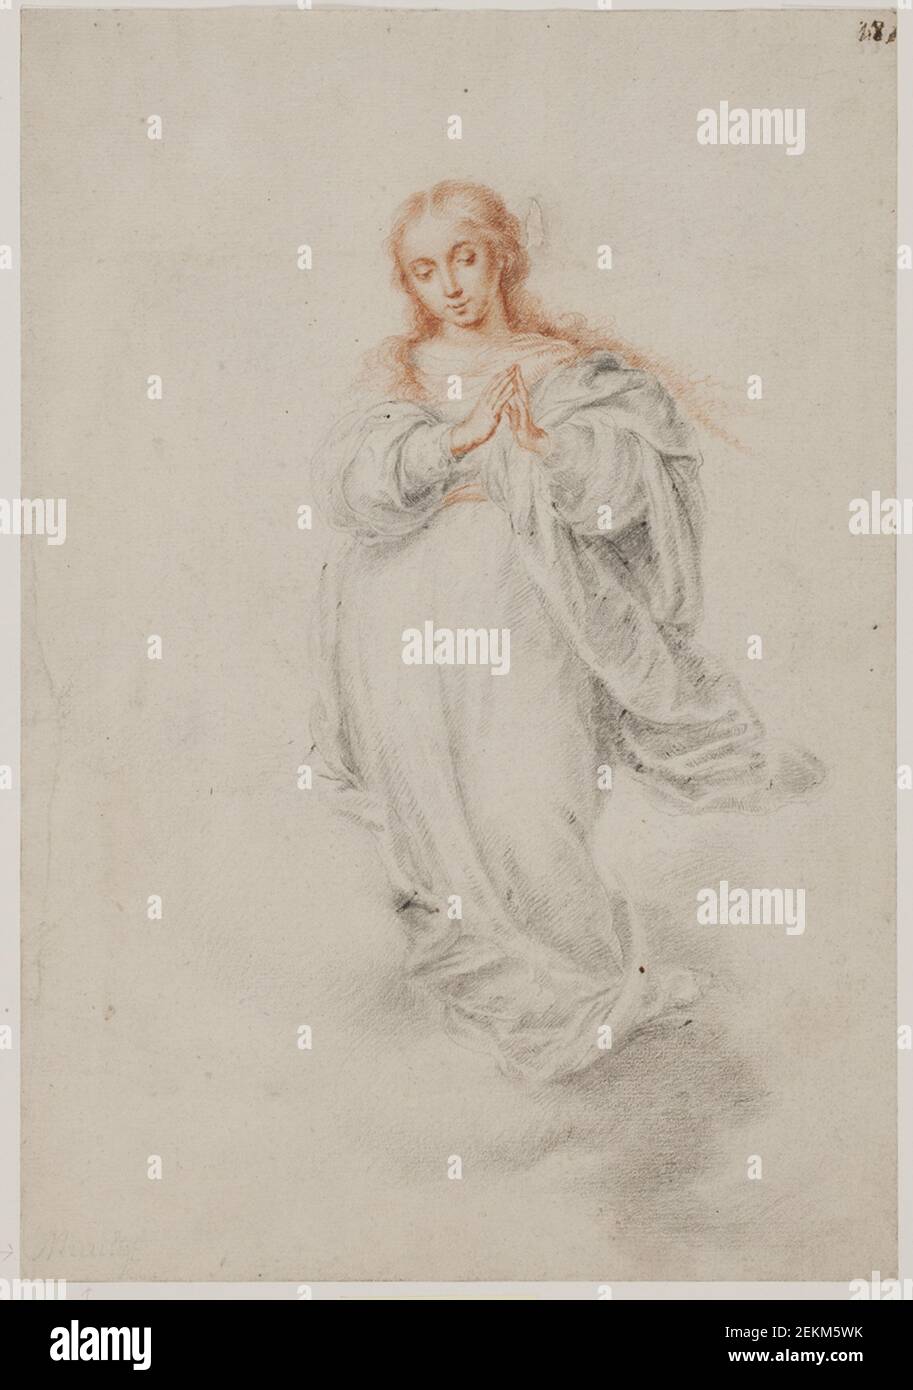 Bartolome Esteban Murillo (1618-1682), the immensely conception, Virgin Mary, About 1665 Stock Photo